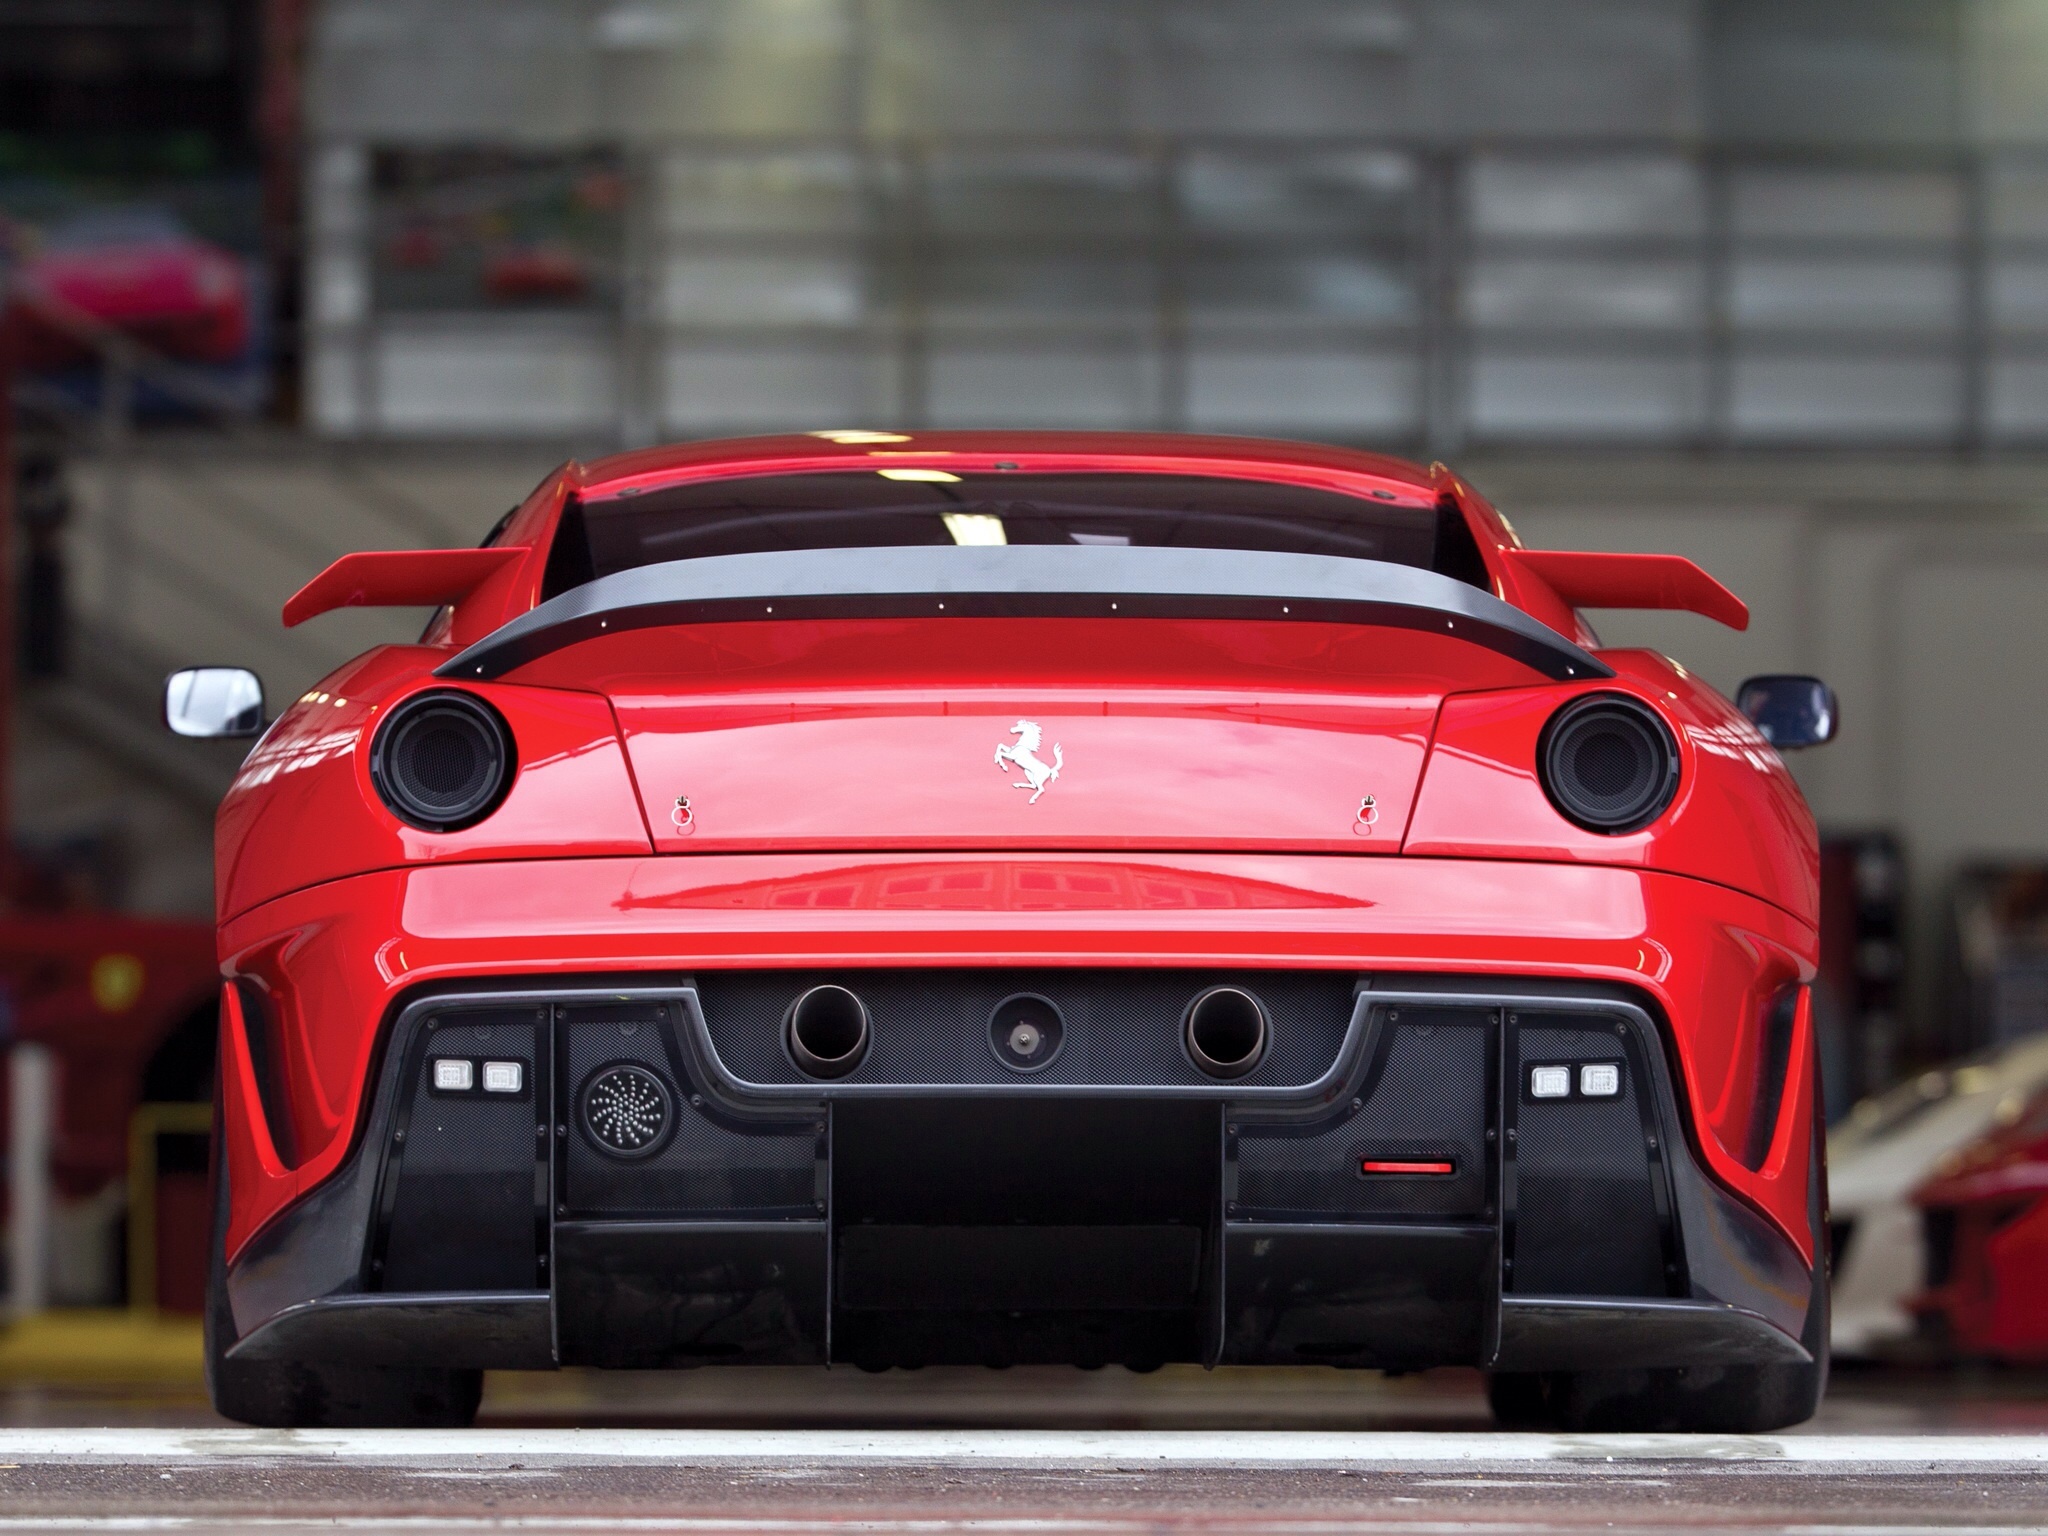 Télécharger des fonds d'écran Ferrari 599Xx HD